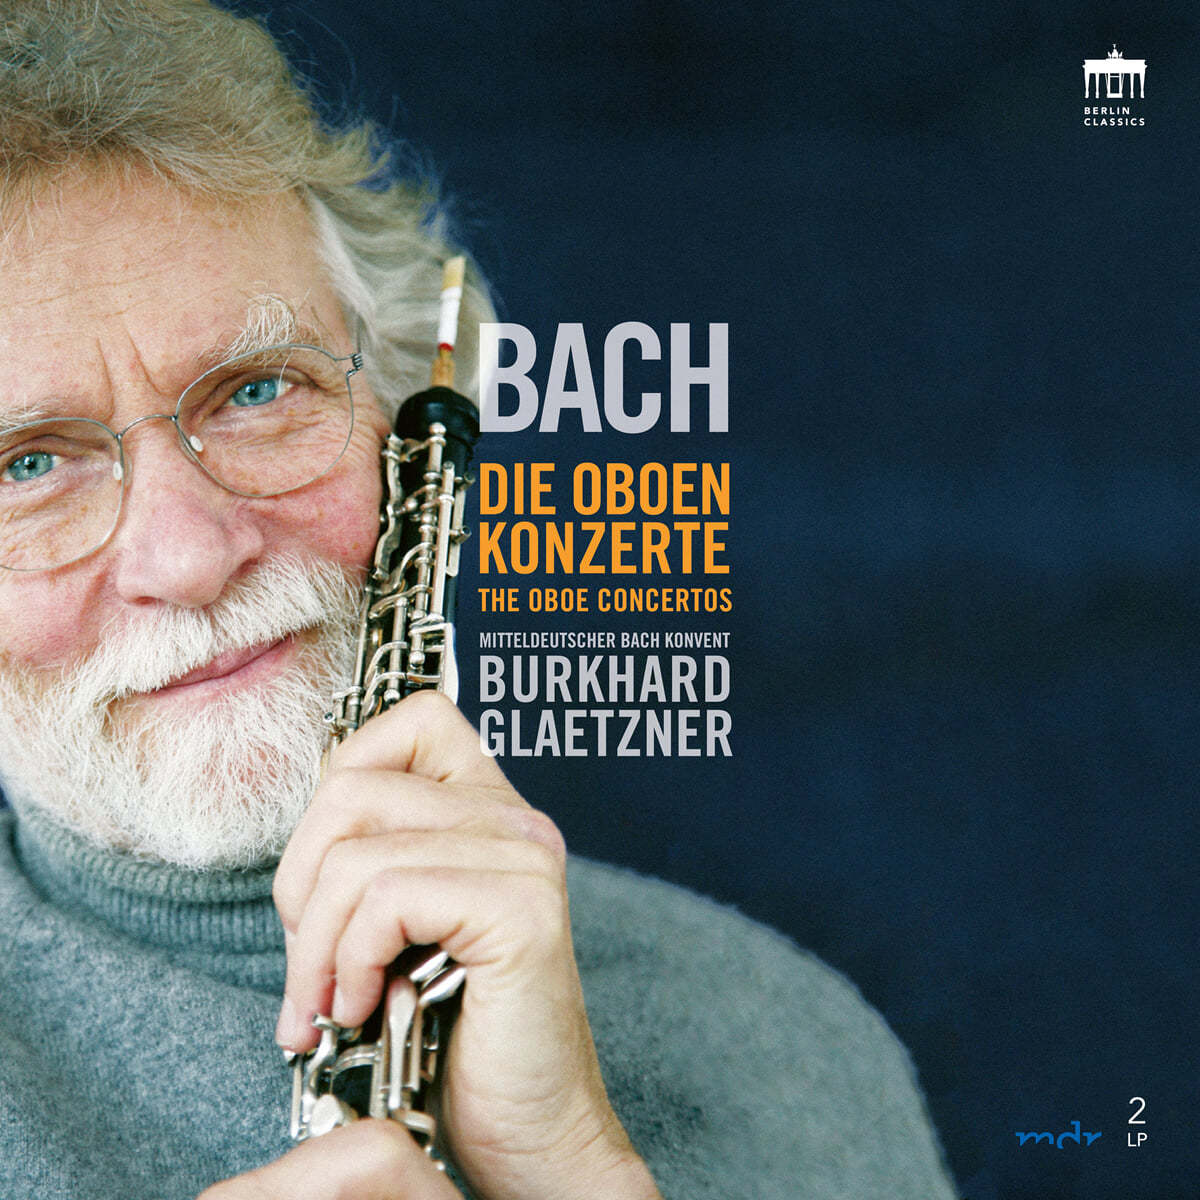 Burkhard Glaetzner 바흐: 오보에 협주곡 (Bach: Oboe Concertos) [2LP]